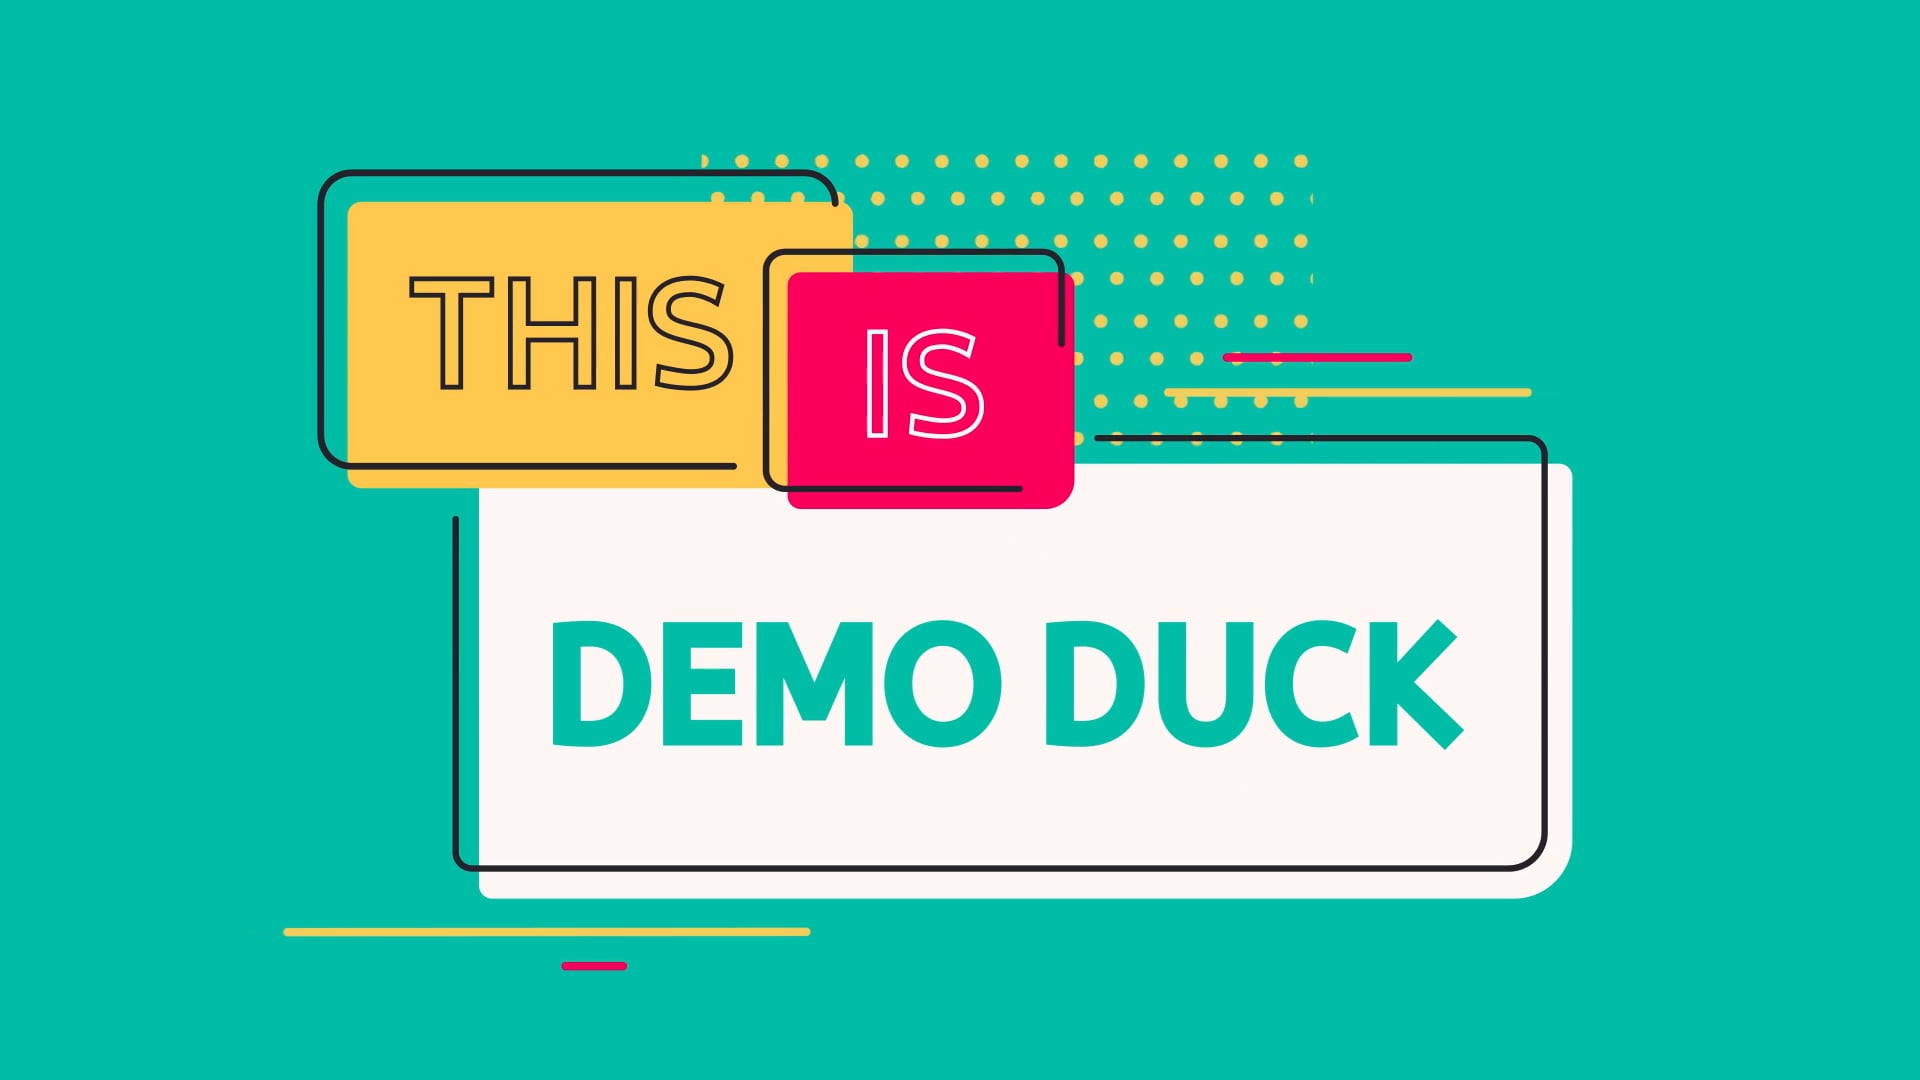 Demo duck vimeo